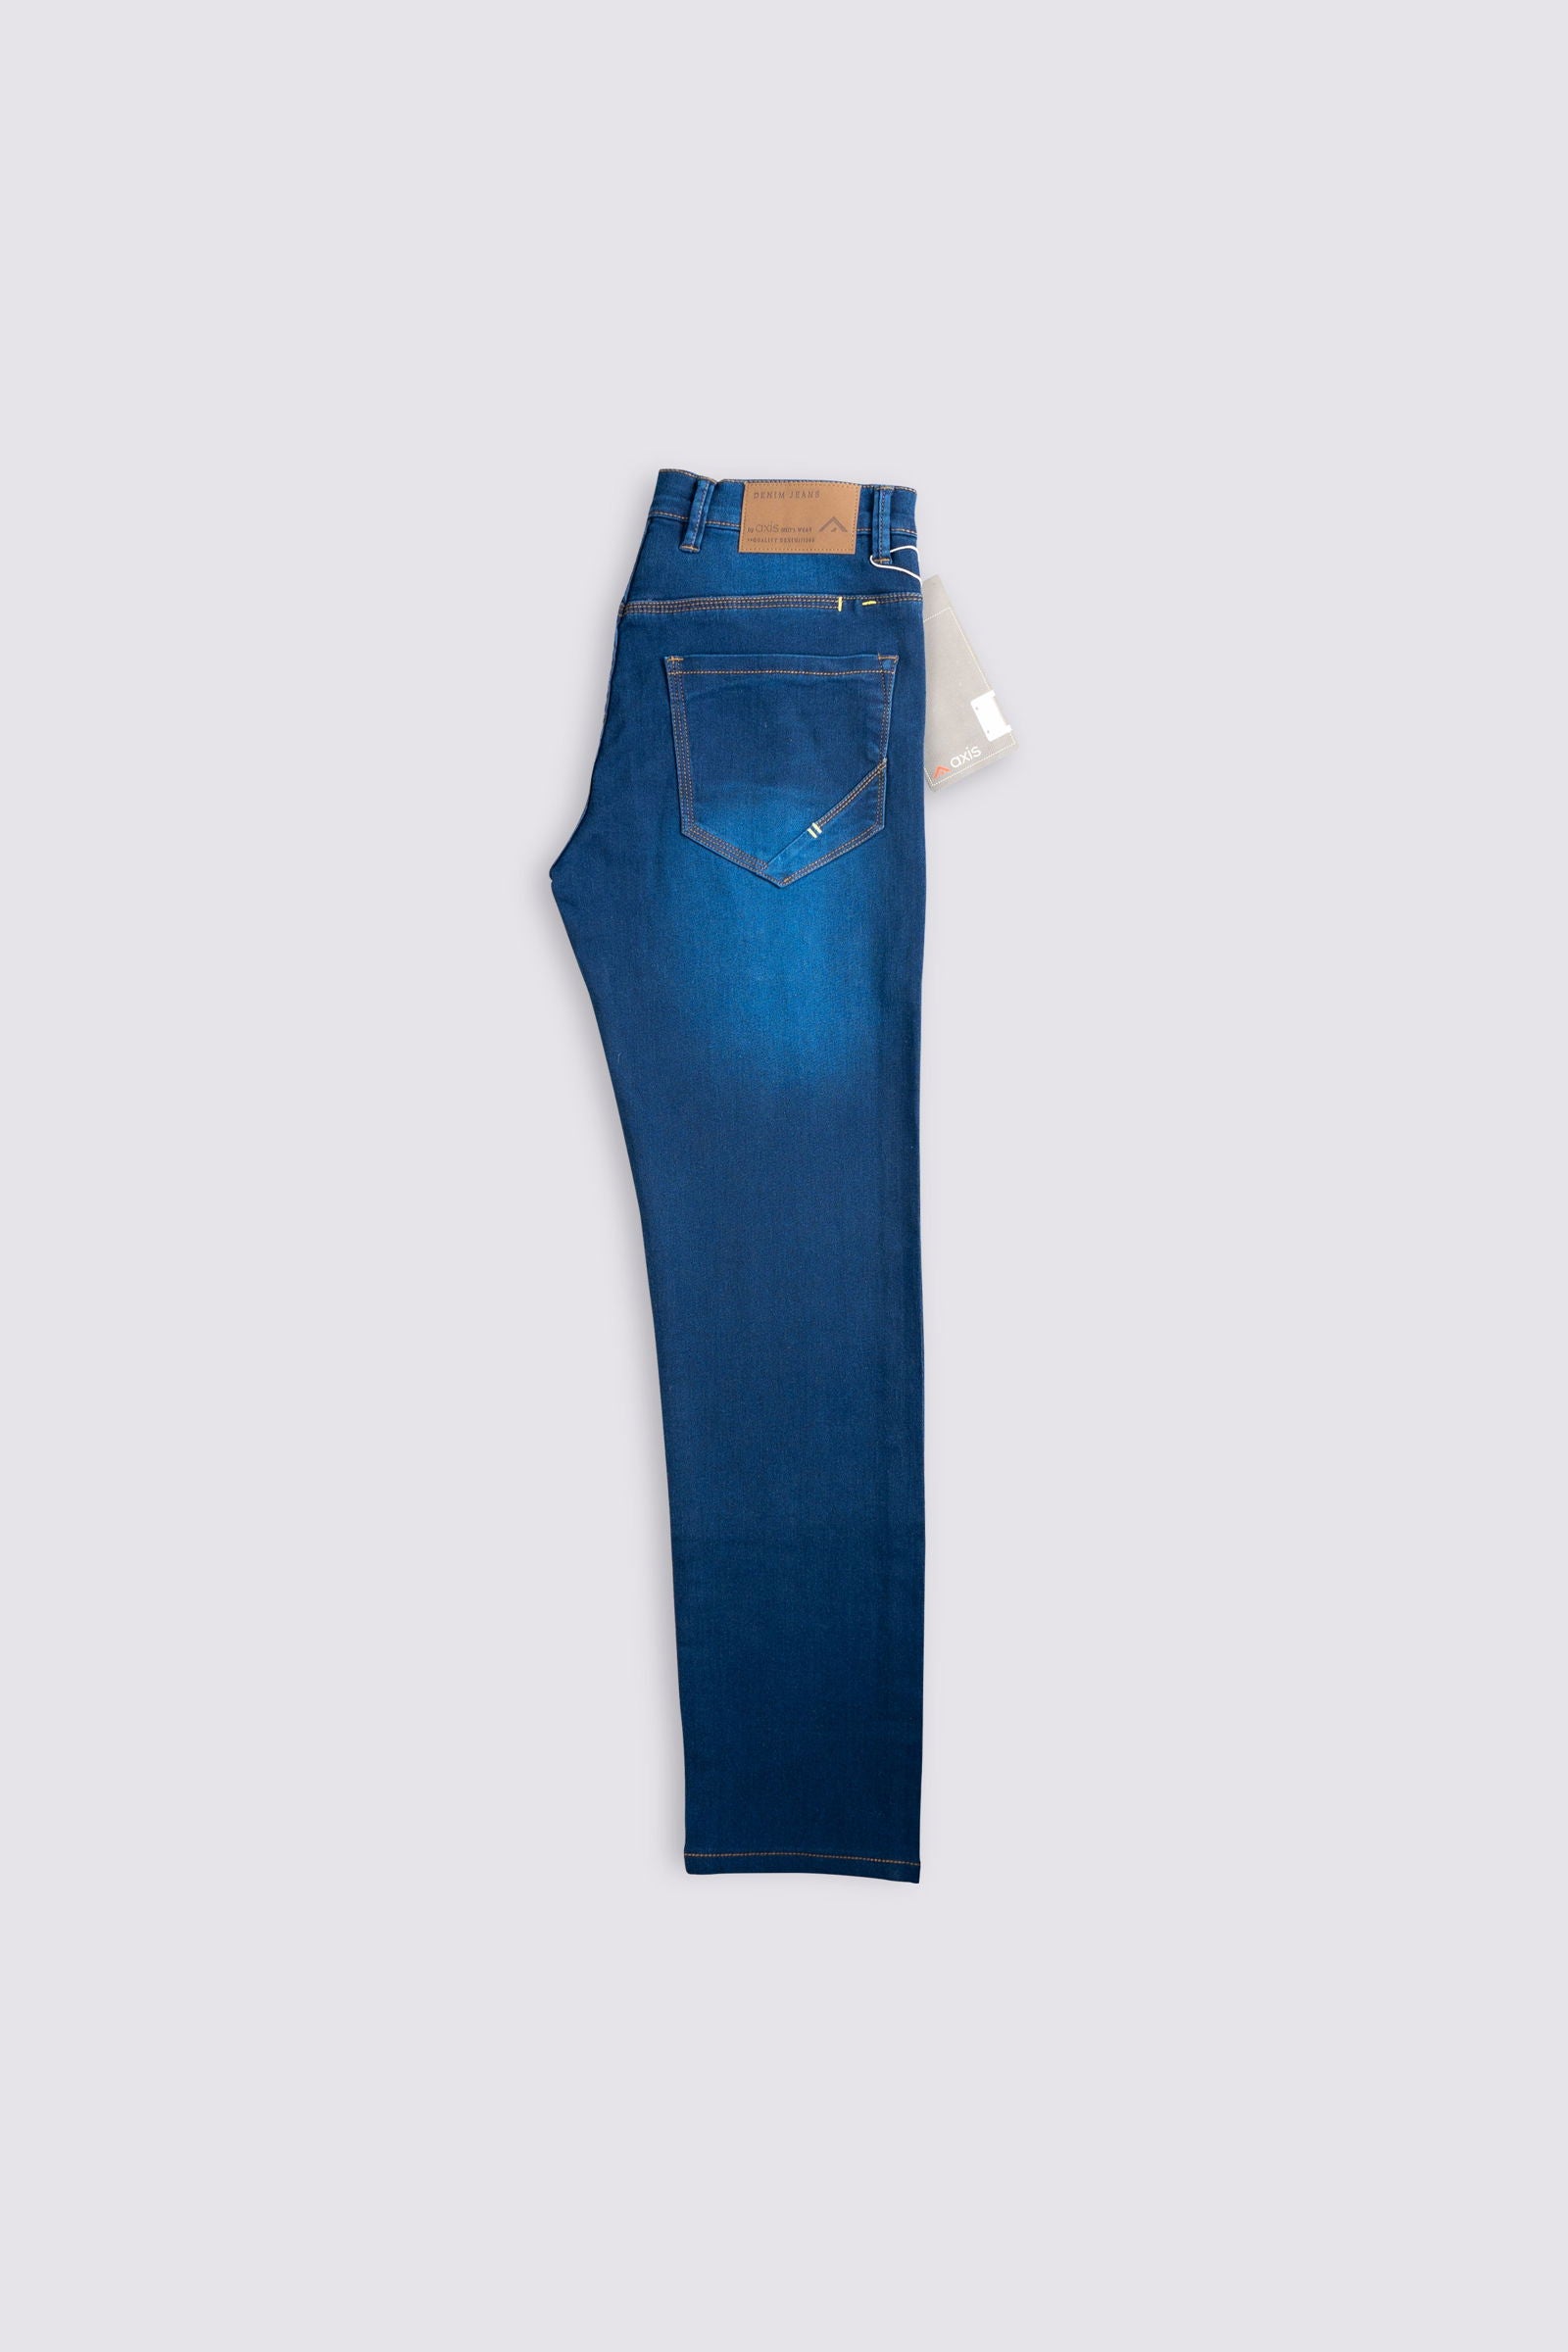 Power Stretch Denim Aqua Blue Jeans - The Axis Clothing